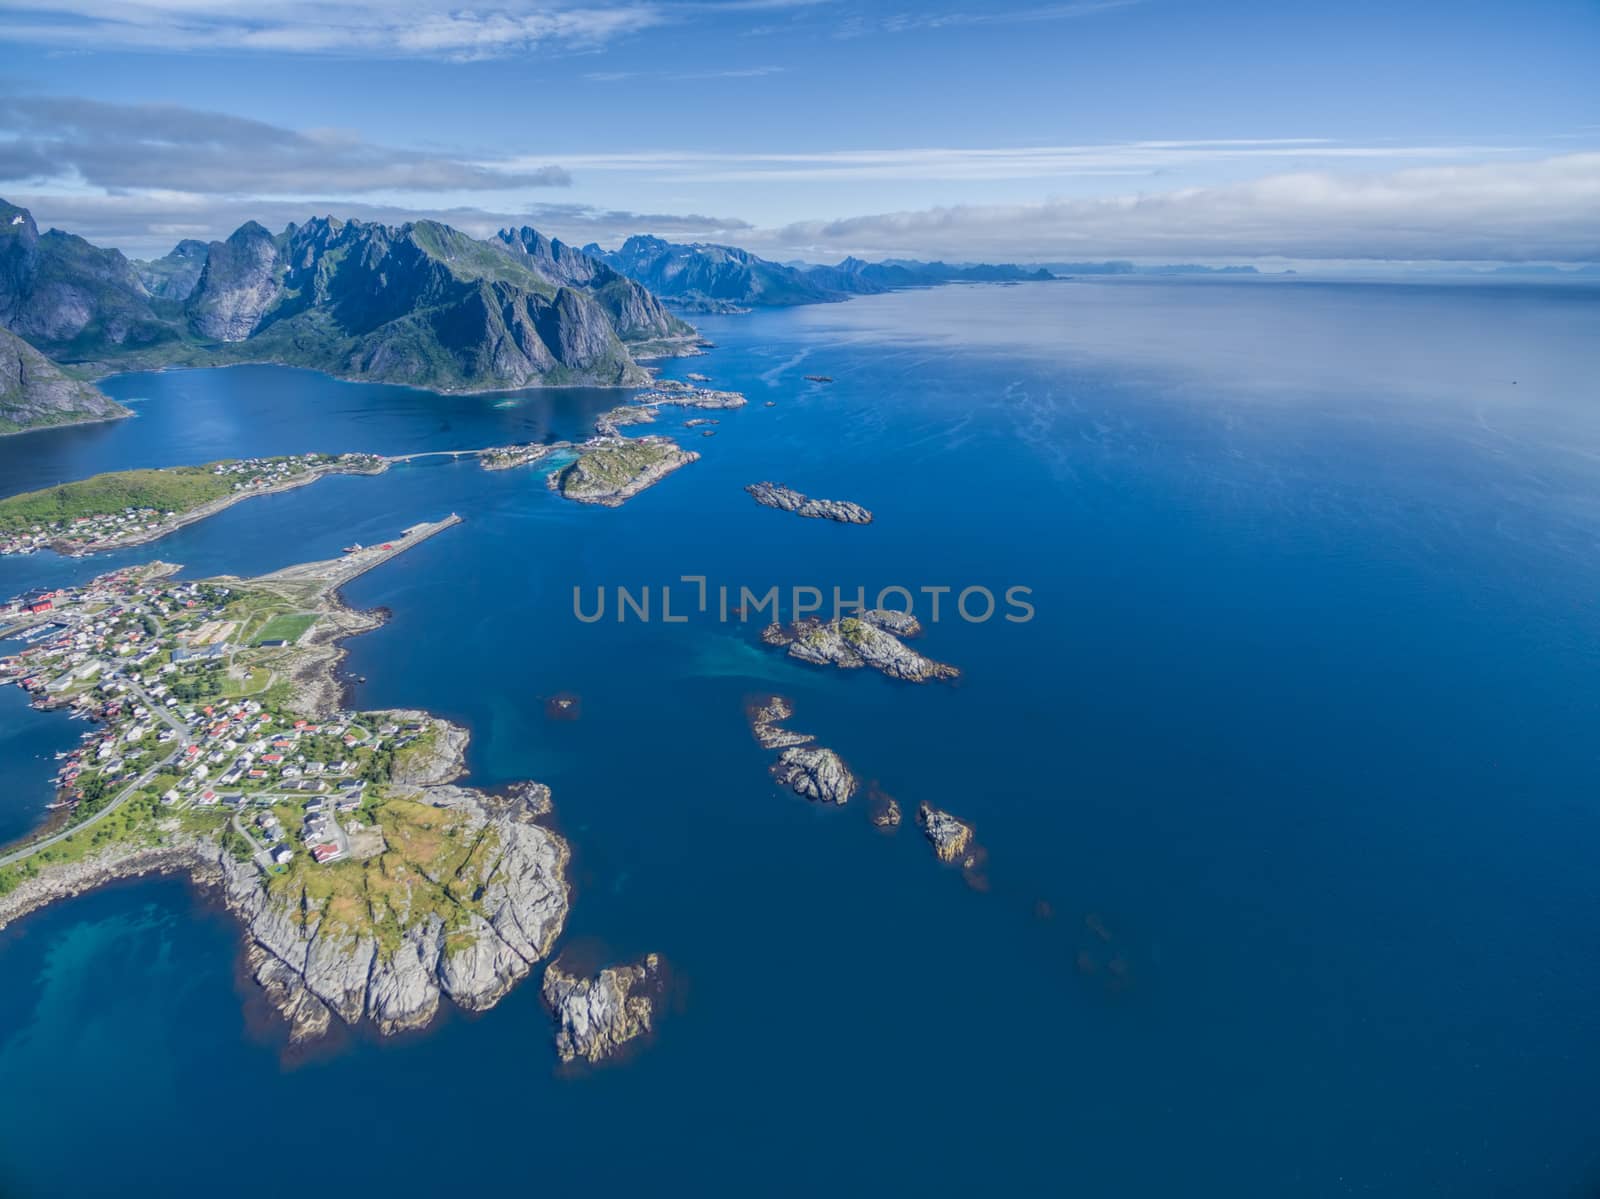 Aerial view of rocky coastline of Lofoten islands in Norway